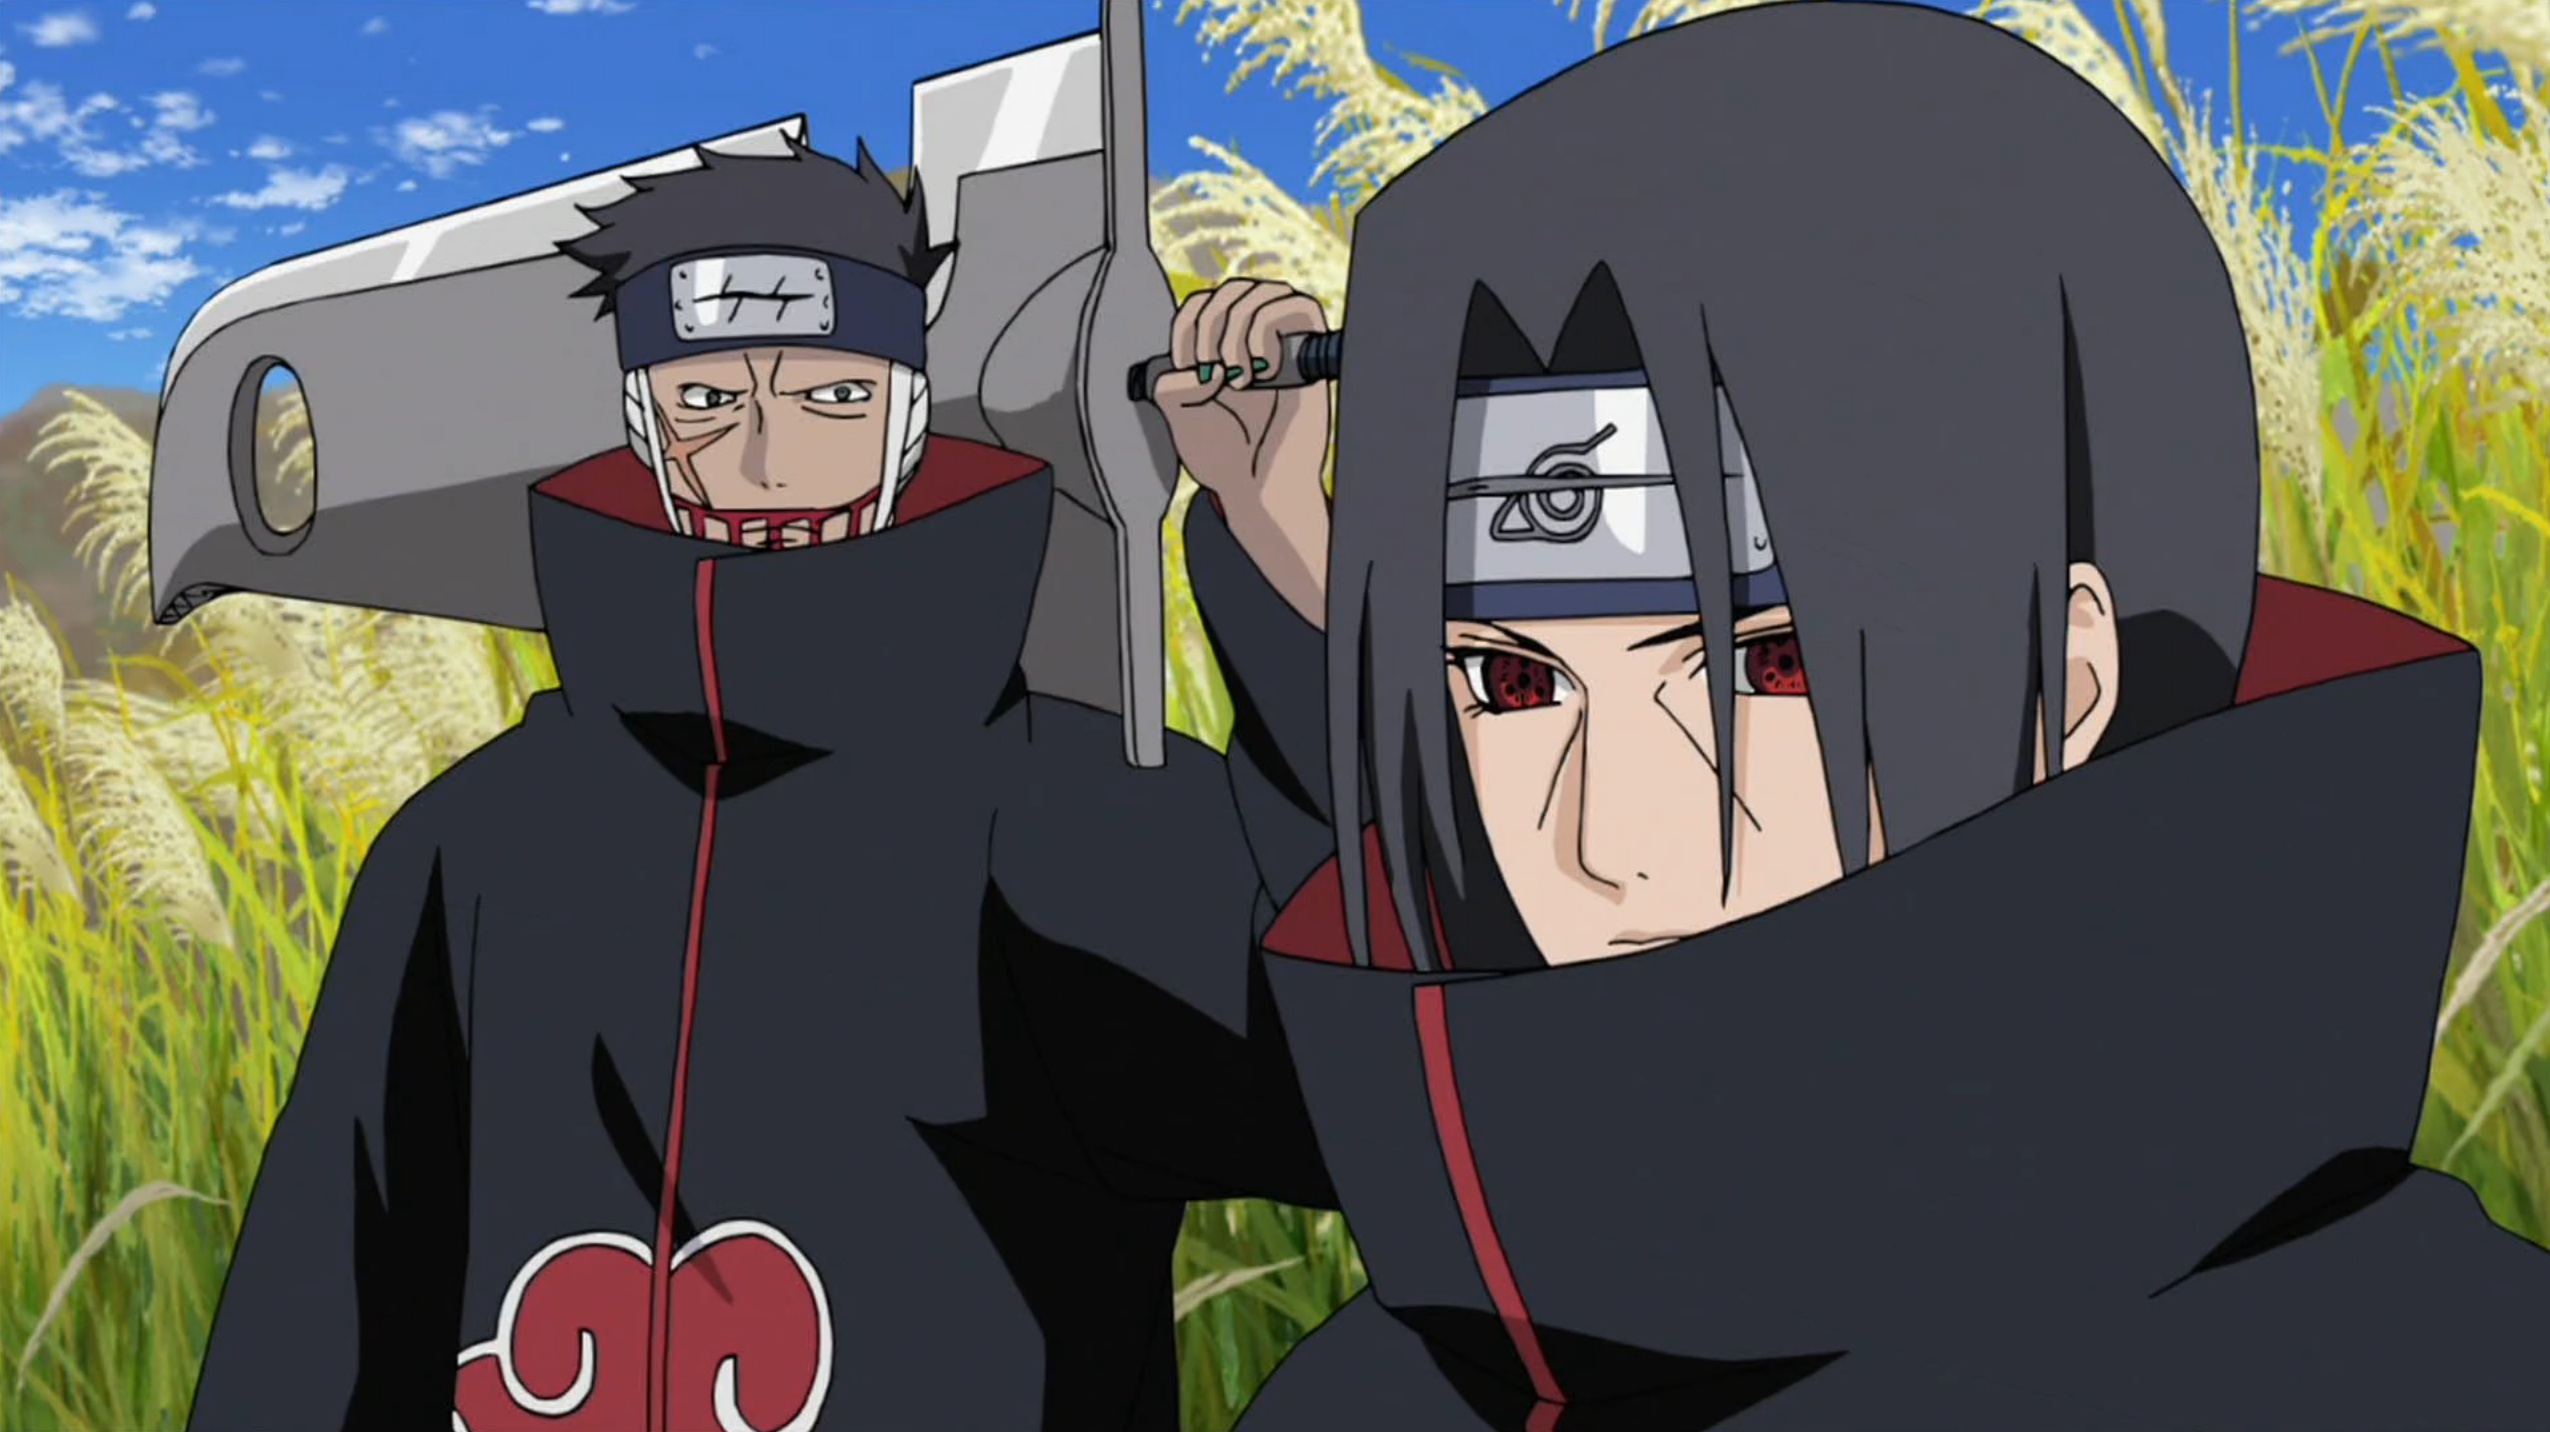 Akatsuki: todos os membros, a história e poderes de cada um | Naruto -  Aficionados